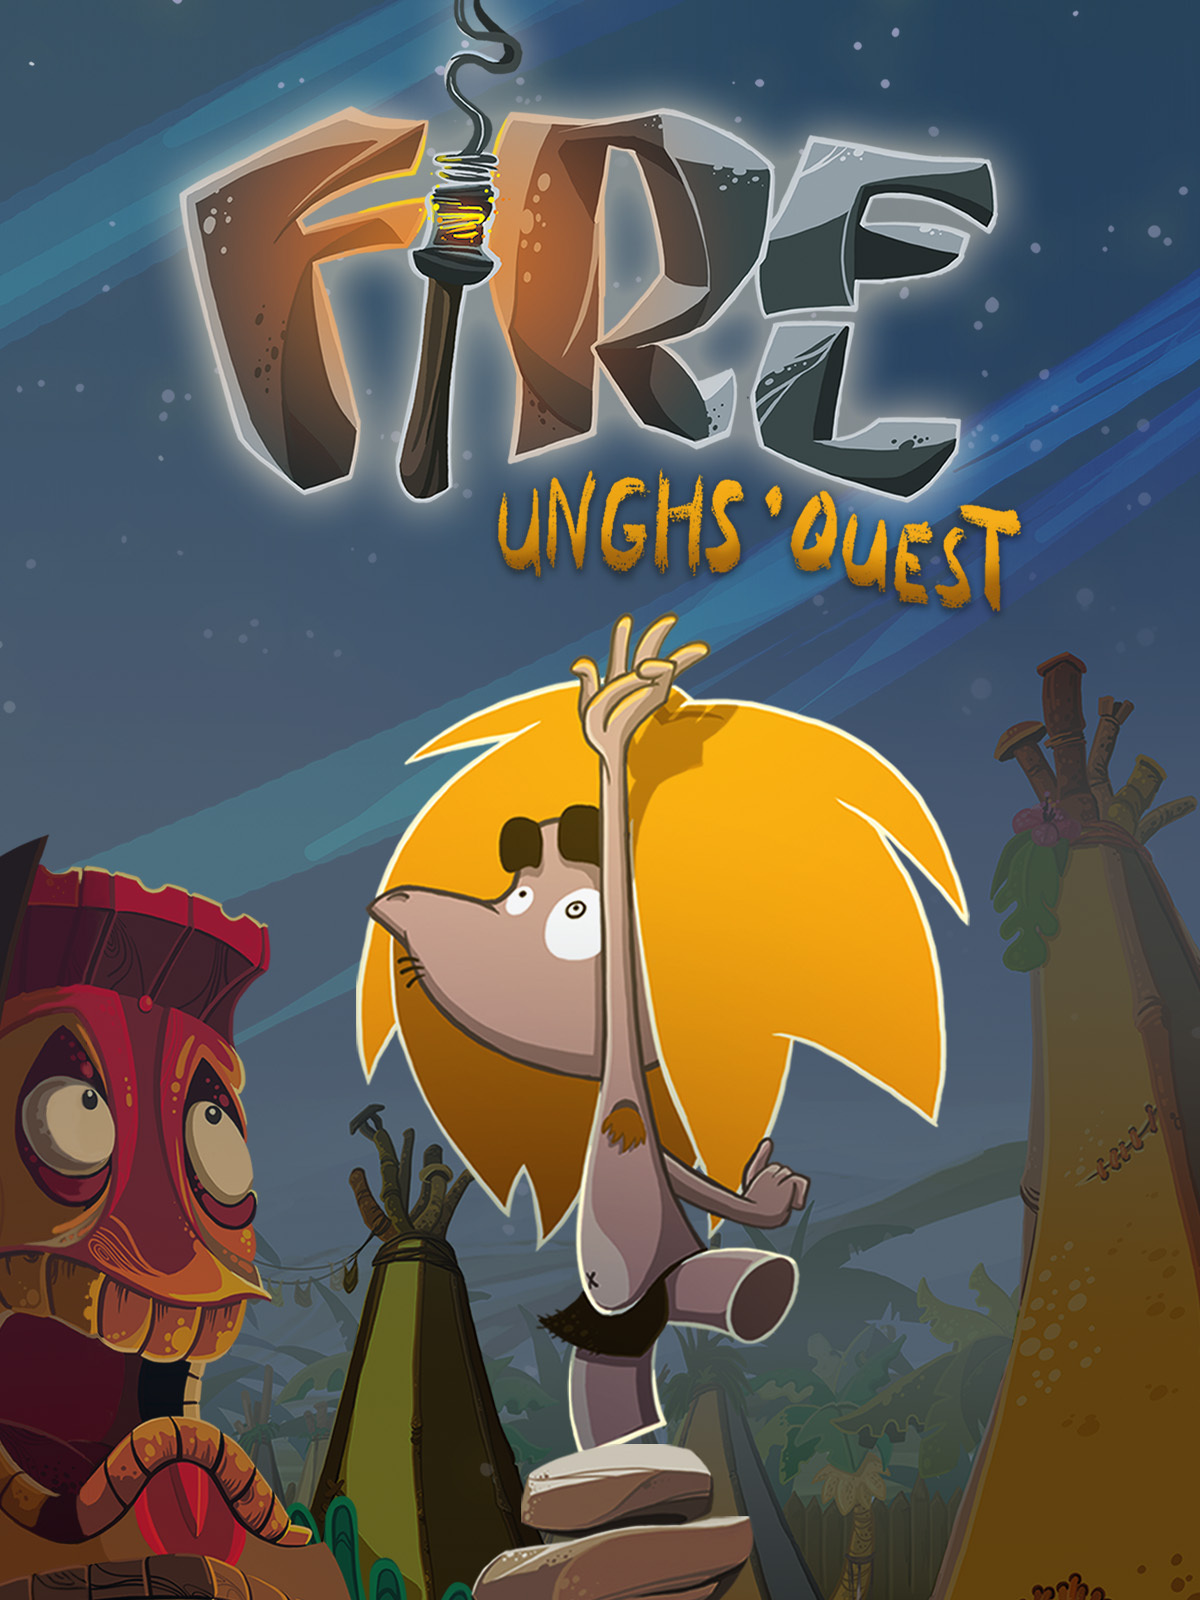 Fire: Ungh's Quest